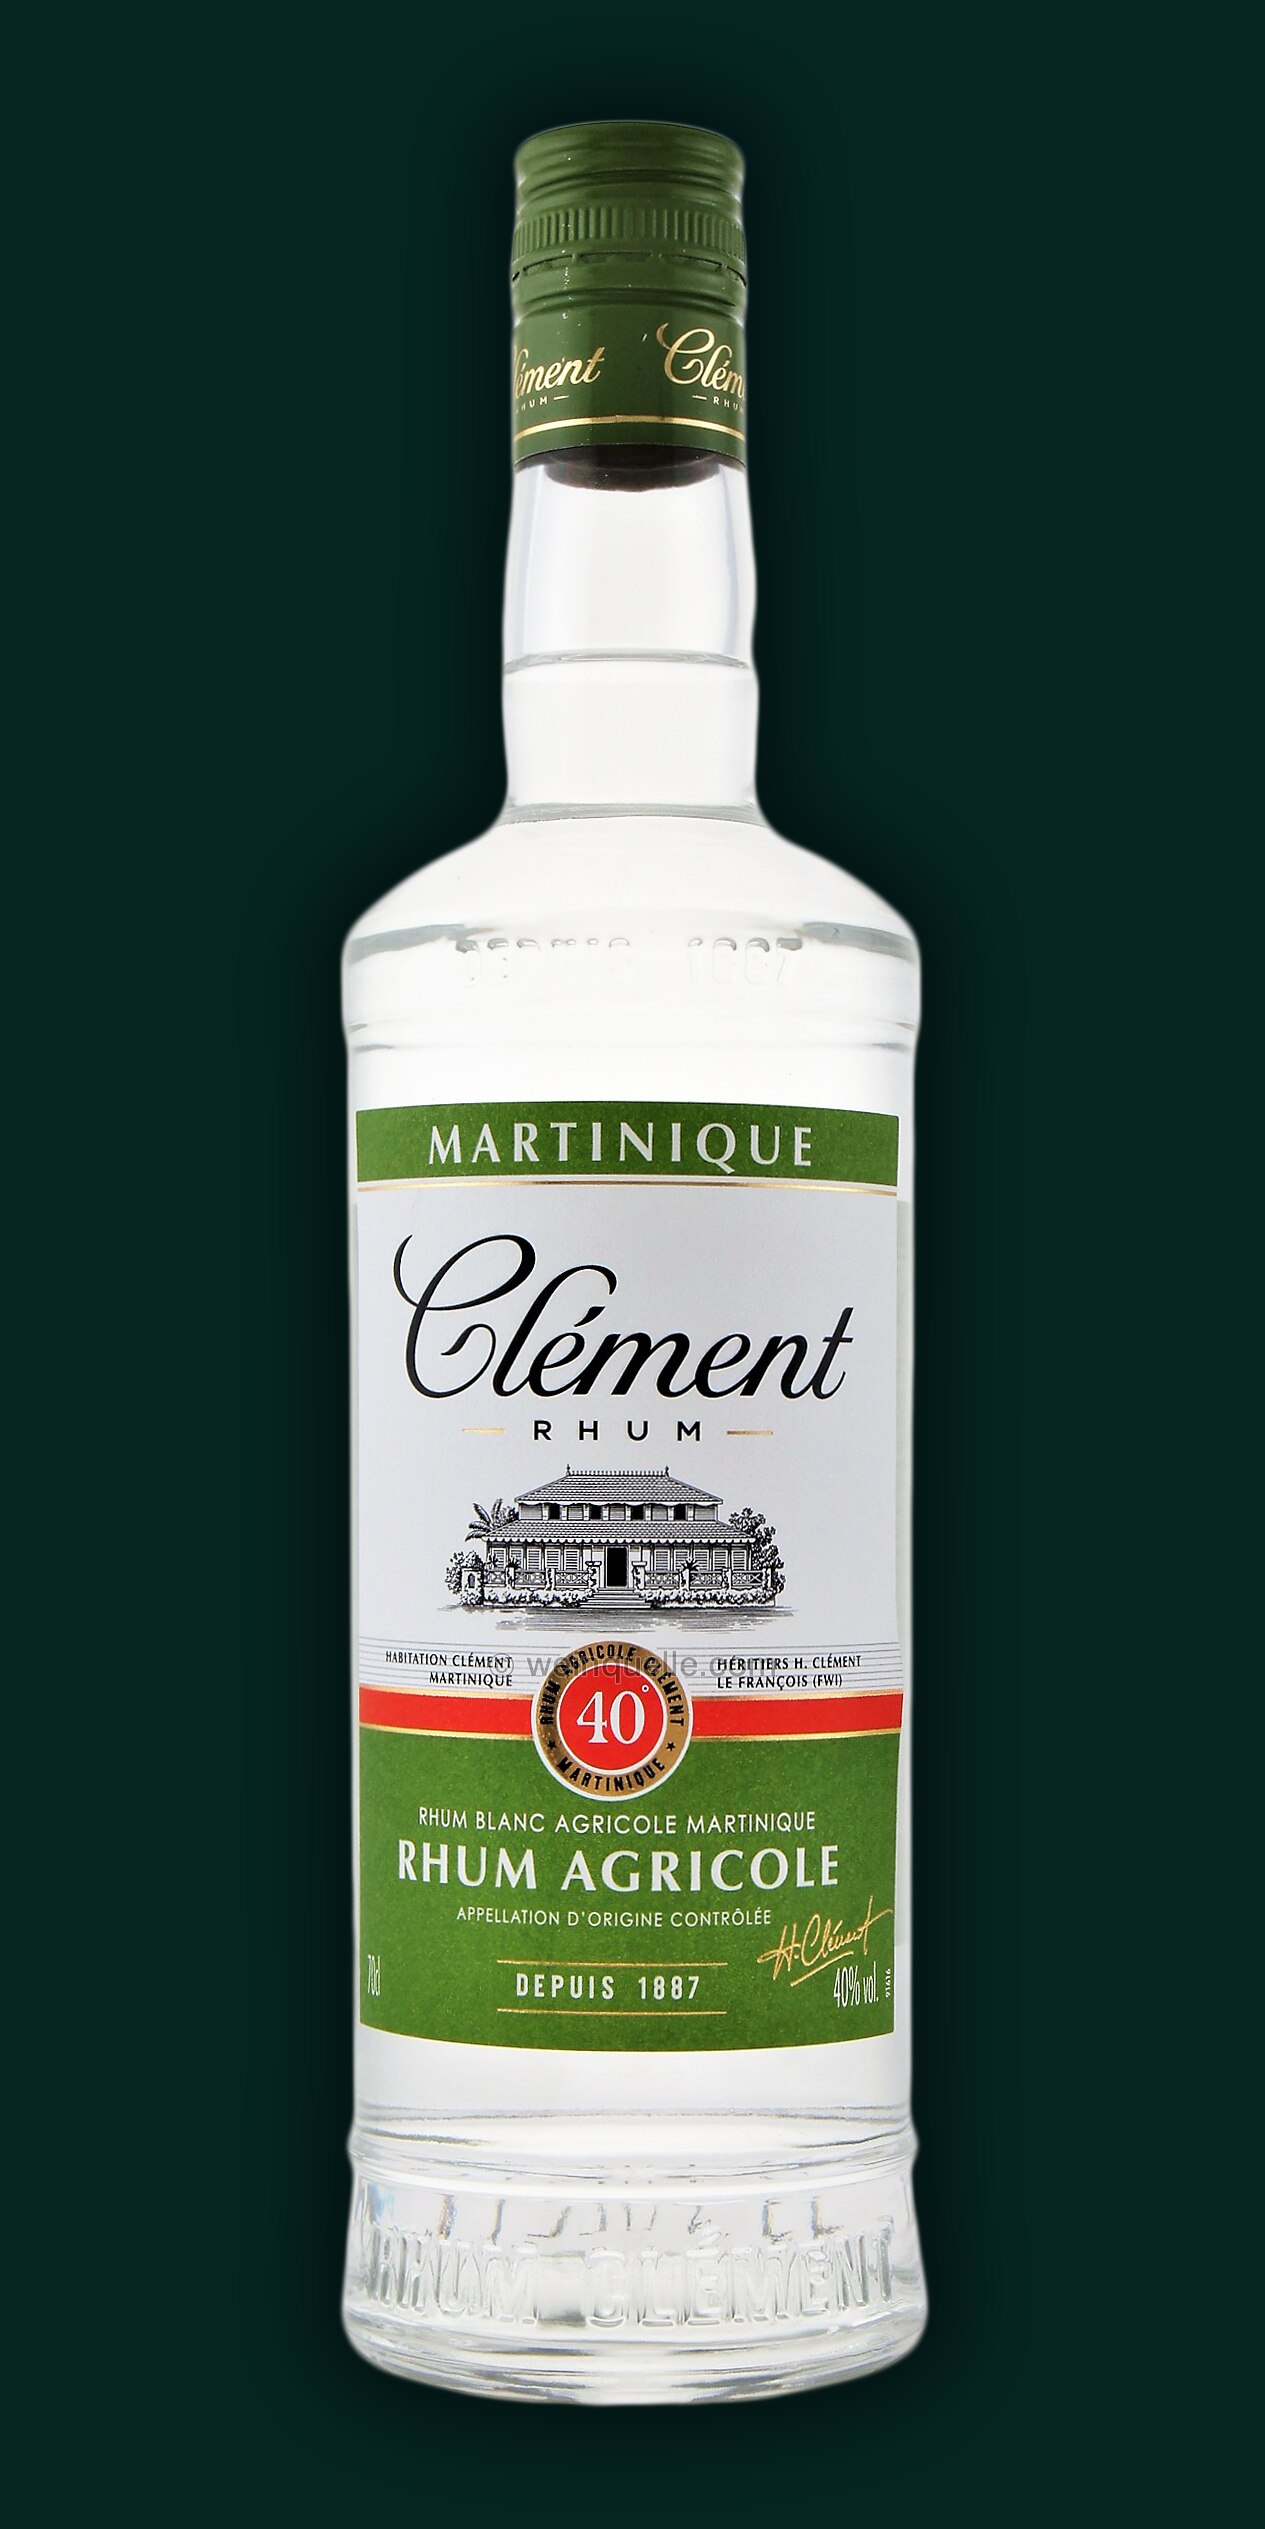 Clement Rhum Agricole Blanc - € Weinquelle 21,45 Lühmann 40